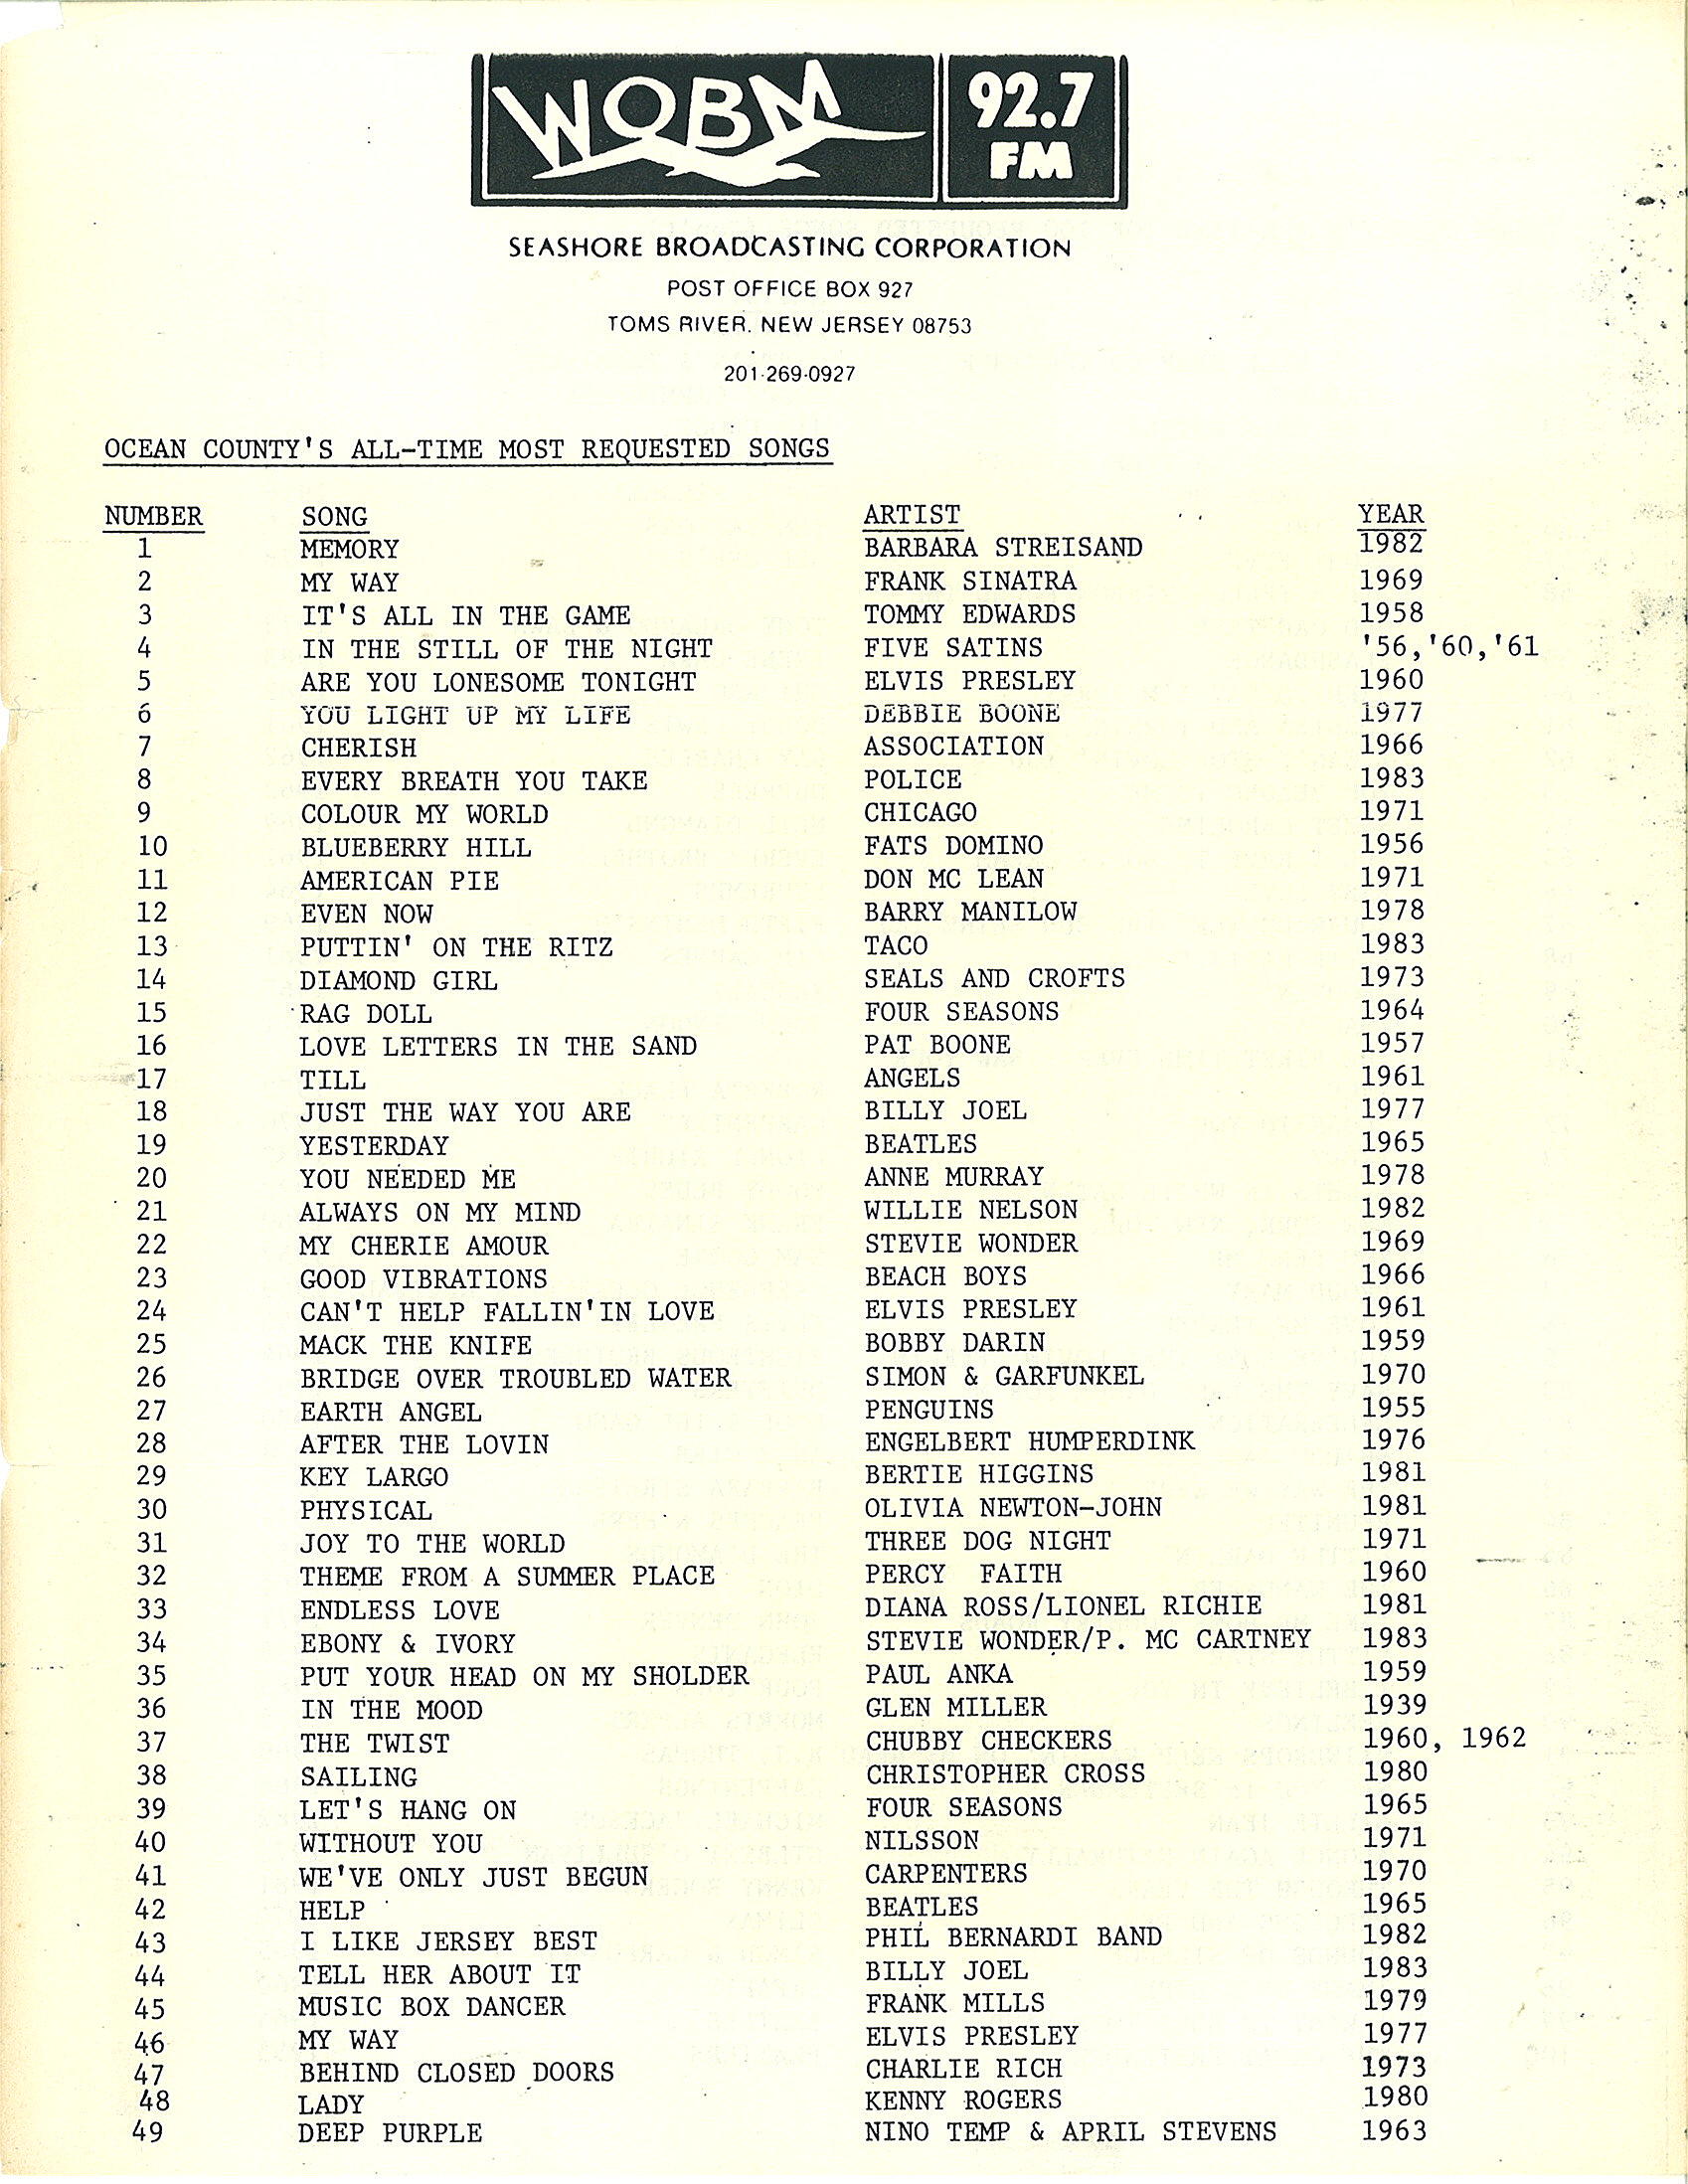 WOBM's Top 100 Songs In 1983 [50 Memories In 50 Days]